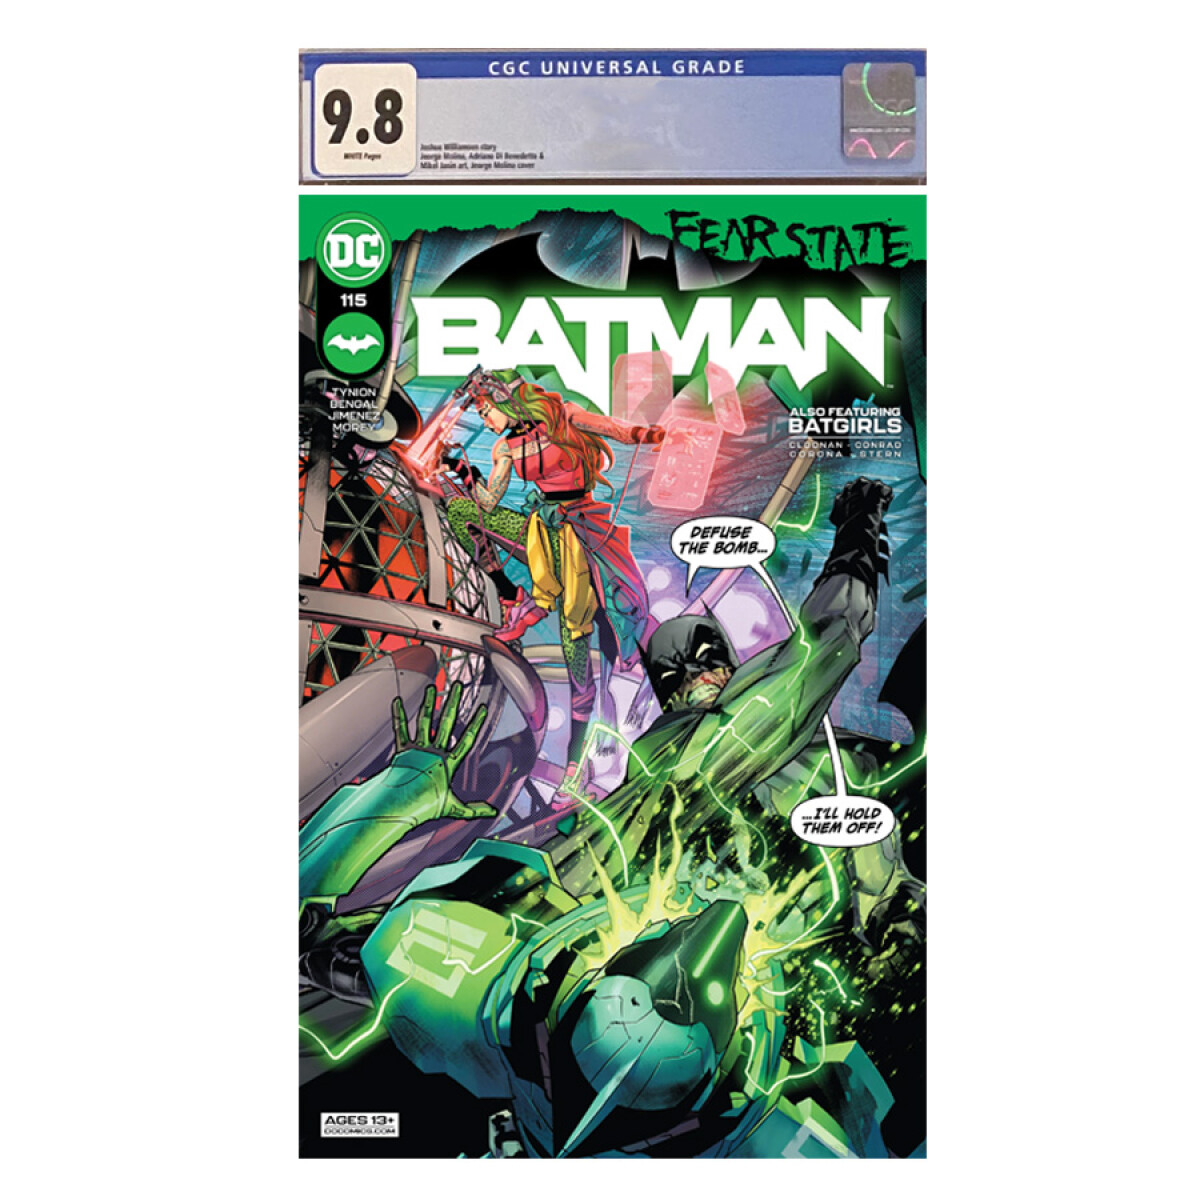 CGC Universal Grade Comic - Batman Fear State! · Batman #115 